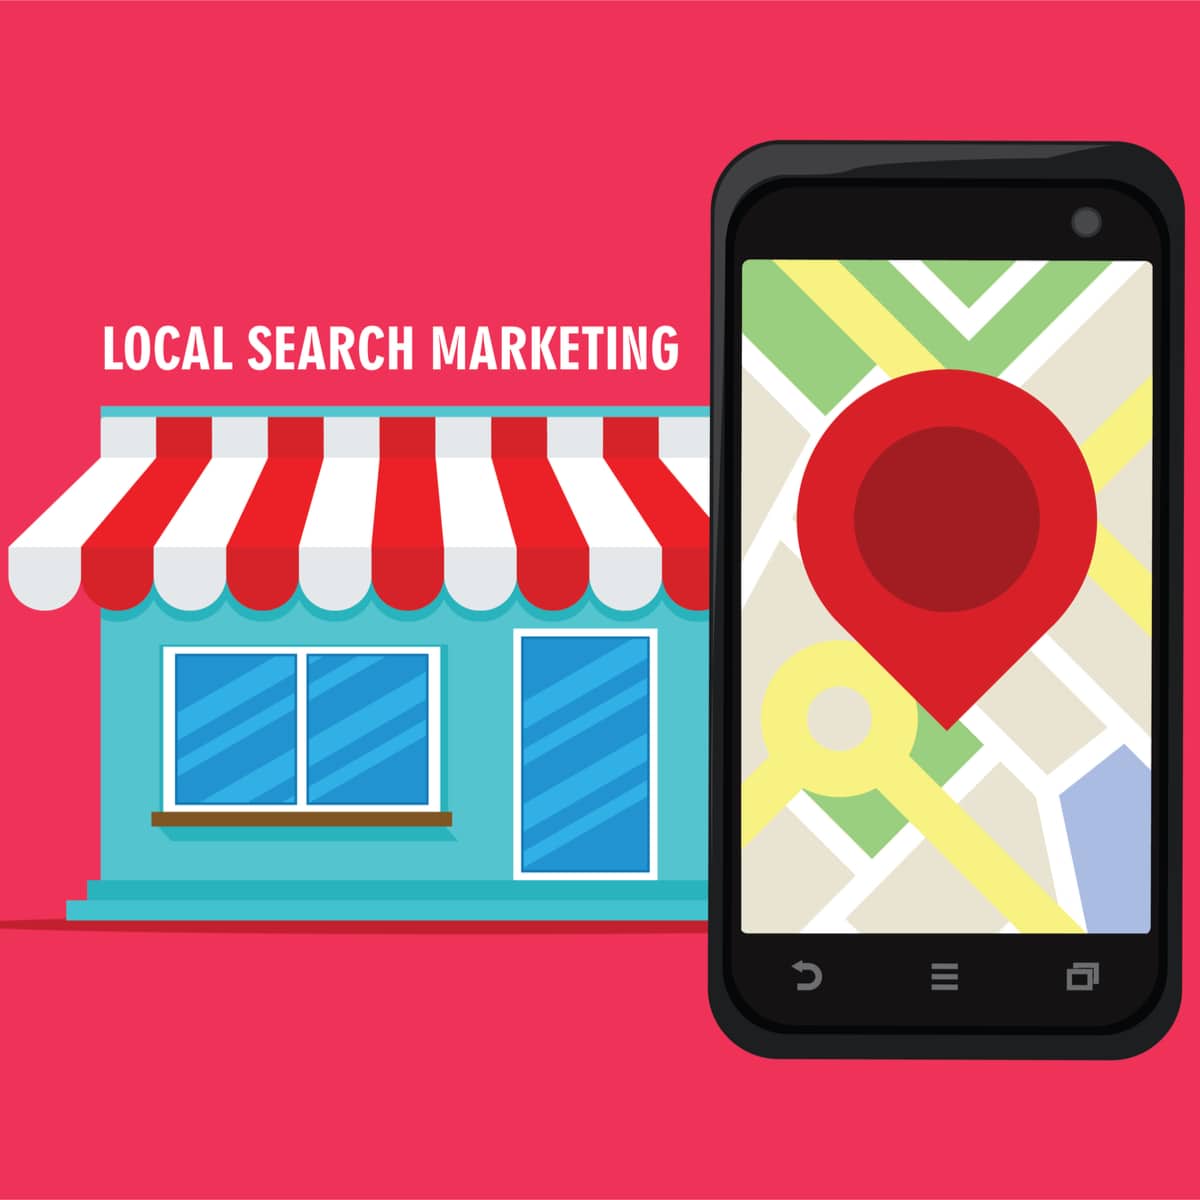 local search engine marketing